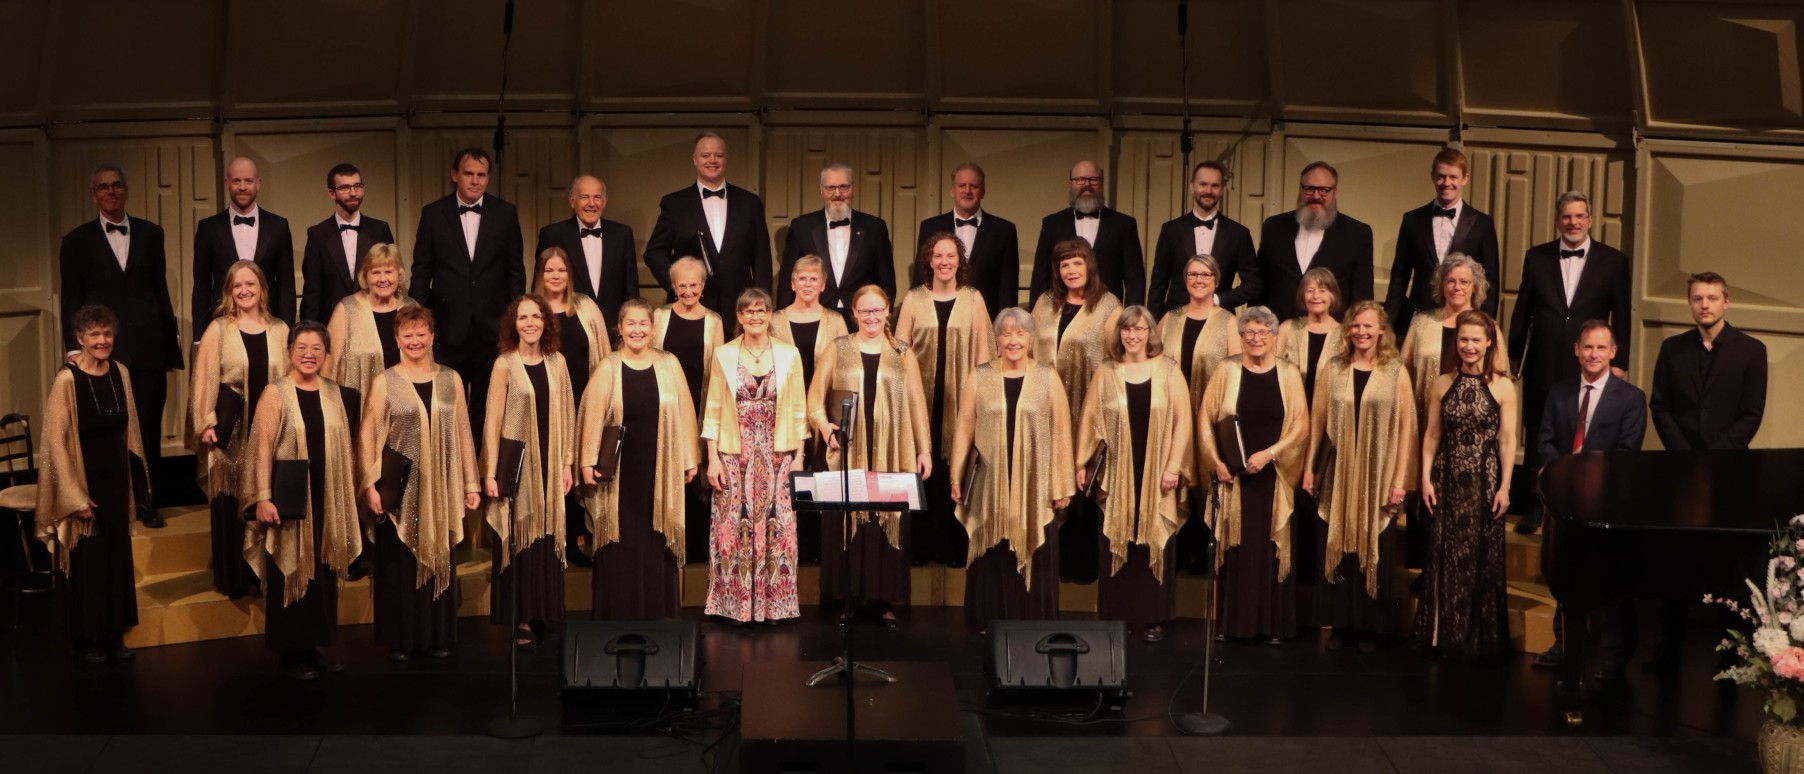 Timbre! Choir of Port Alberni